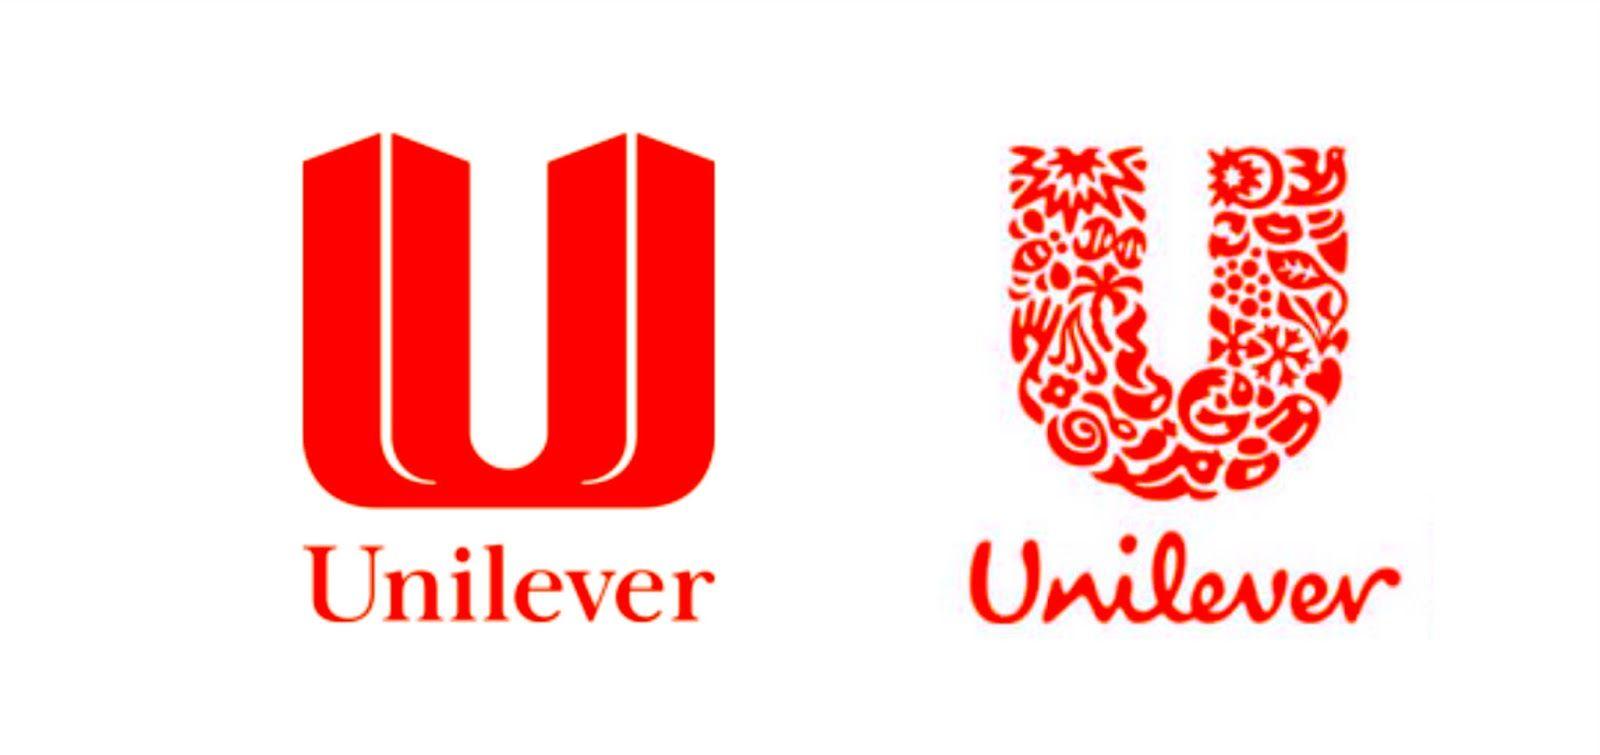 Old Unilever Logo - Muhlach Media Corporation: UNILEVER NETWORK RED CODE LOGO